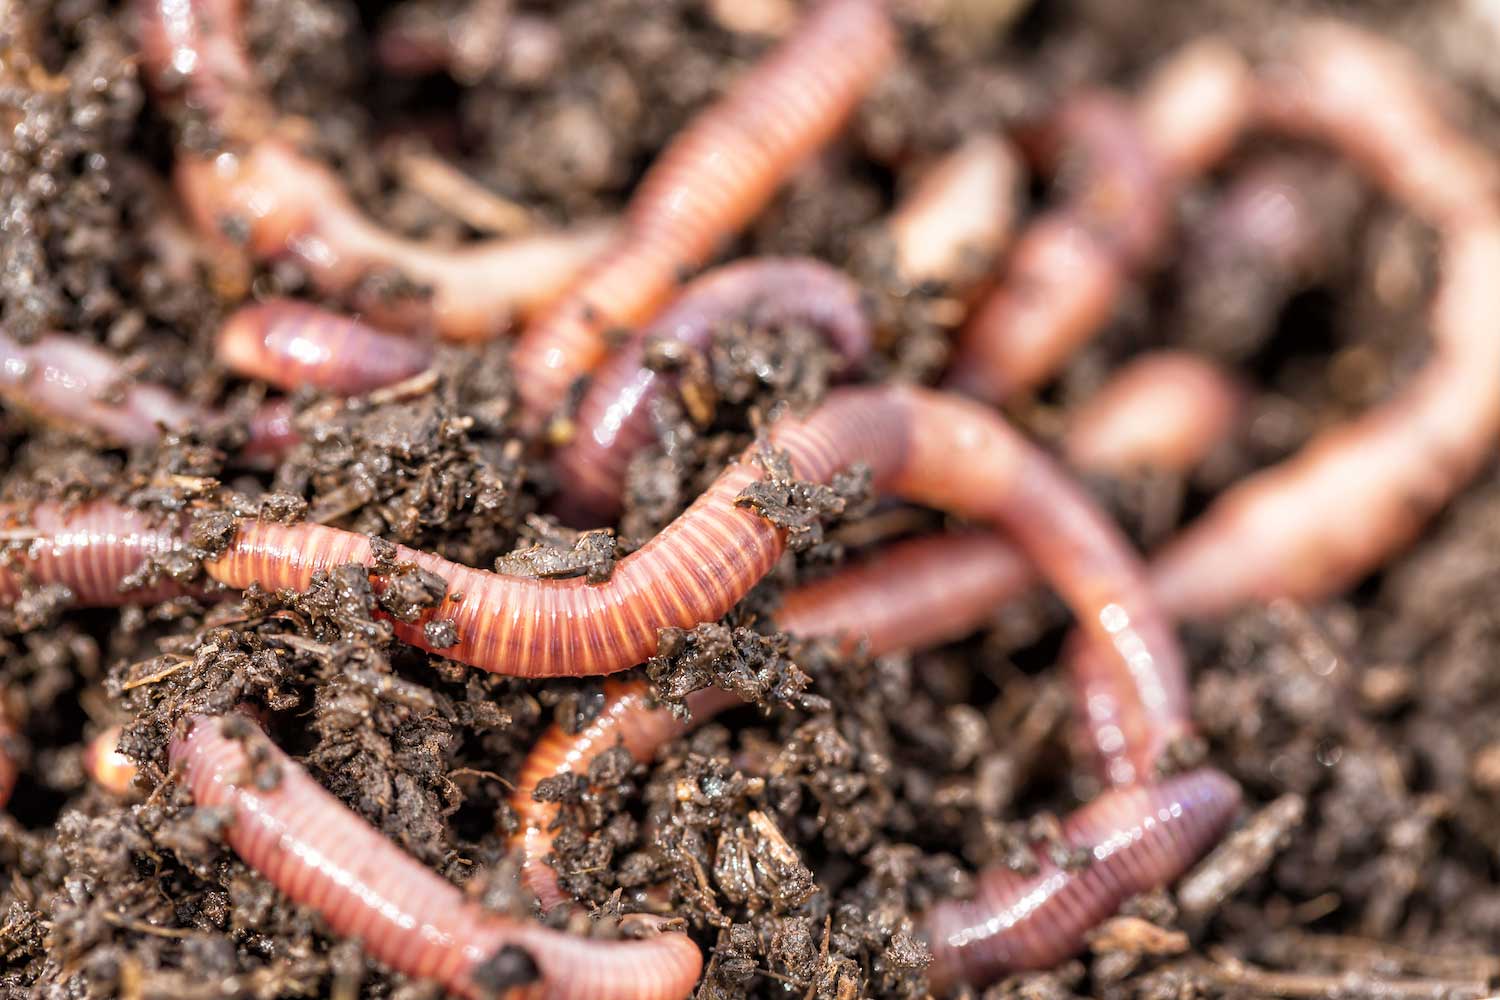 Nature curiosity: Will a worm regenerate if it gets cut in half?